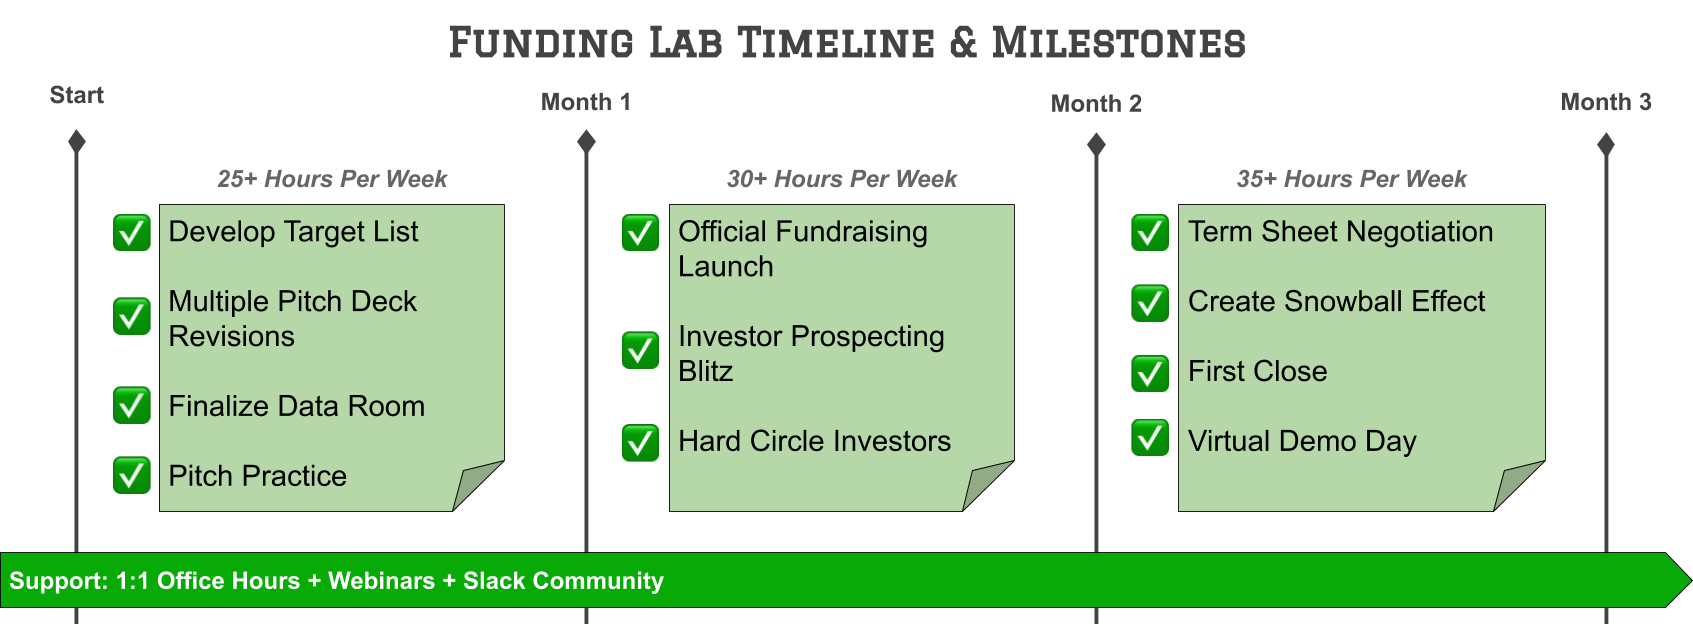 Funding Lab Timeline